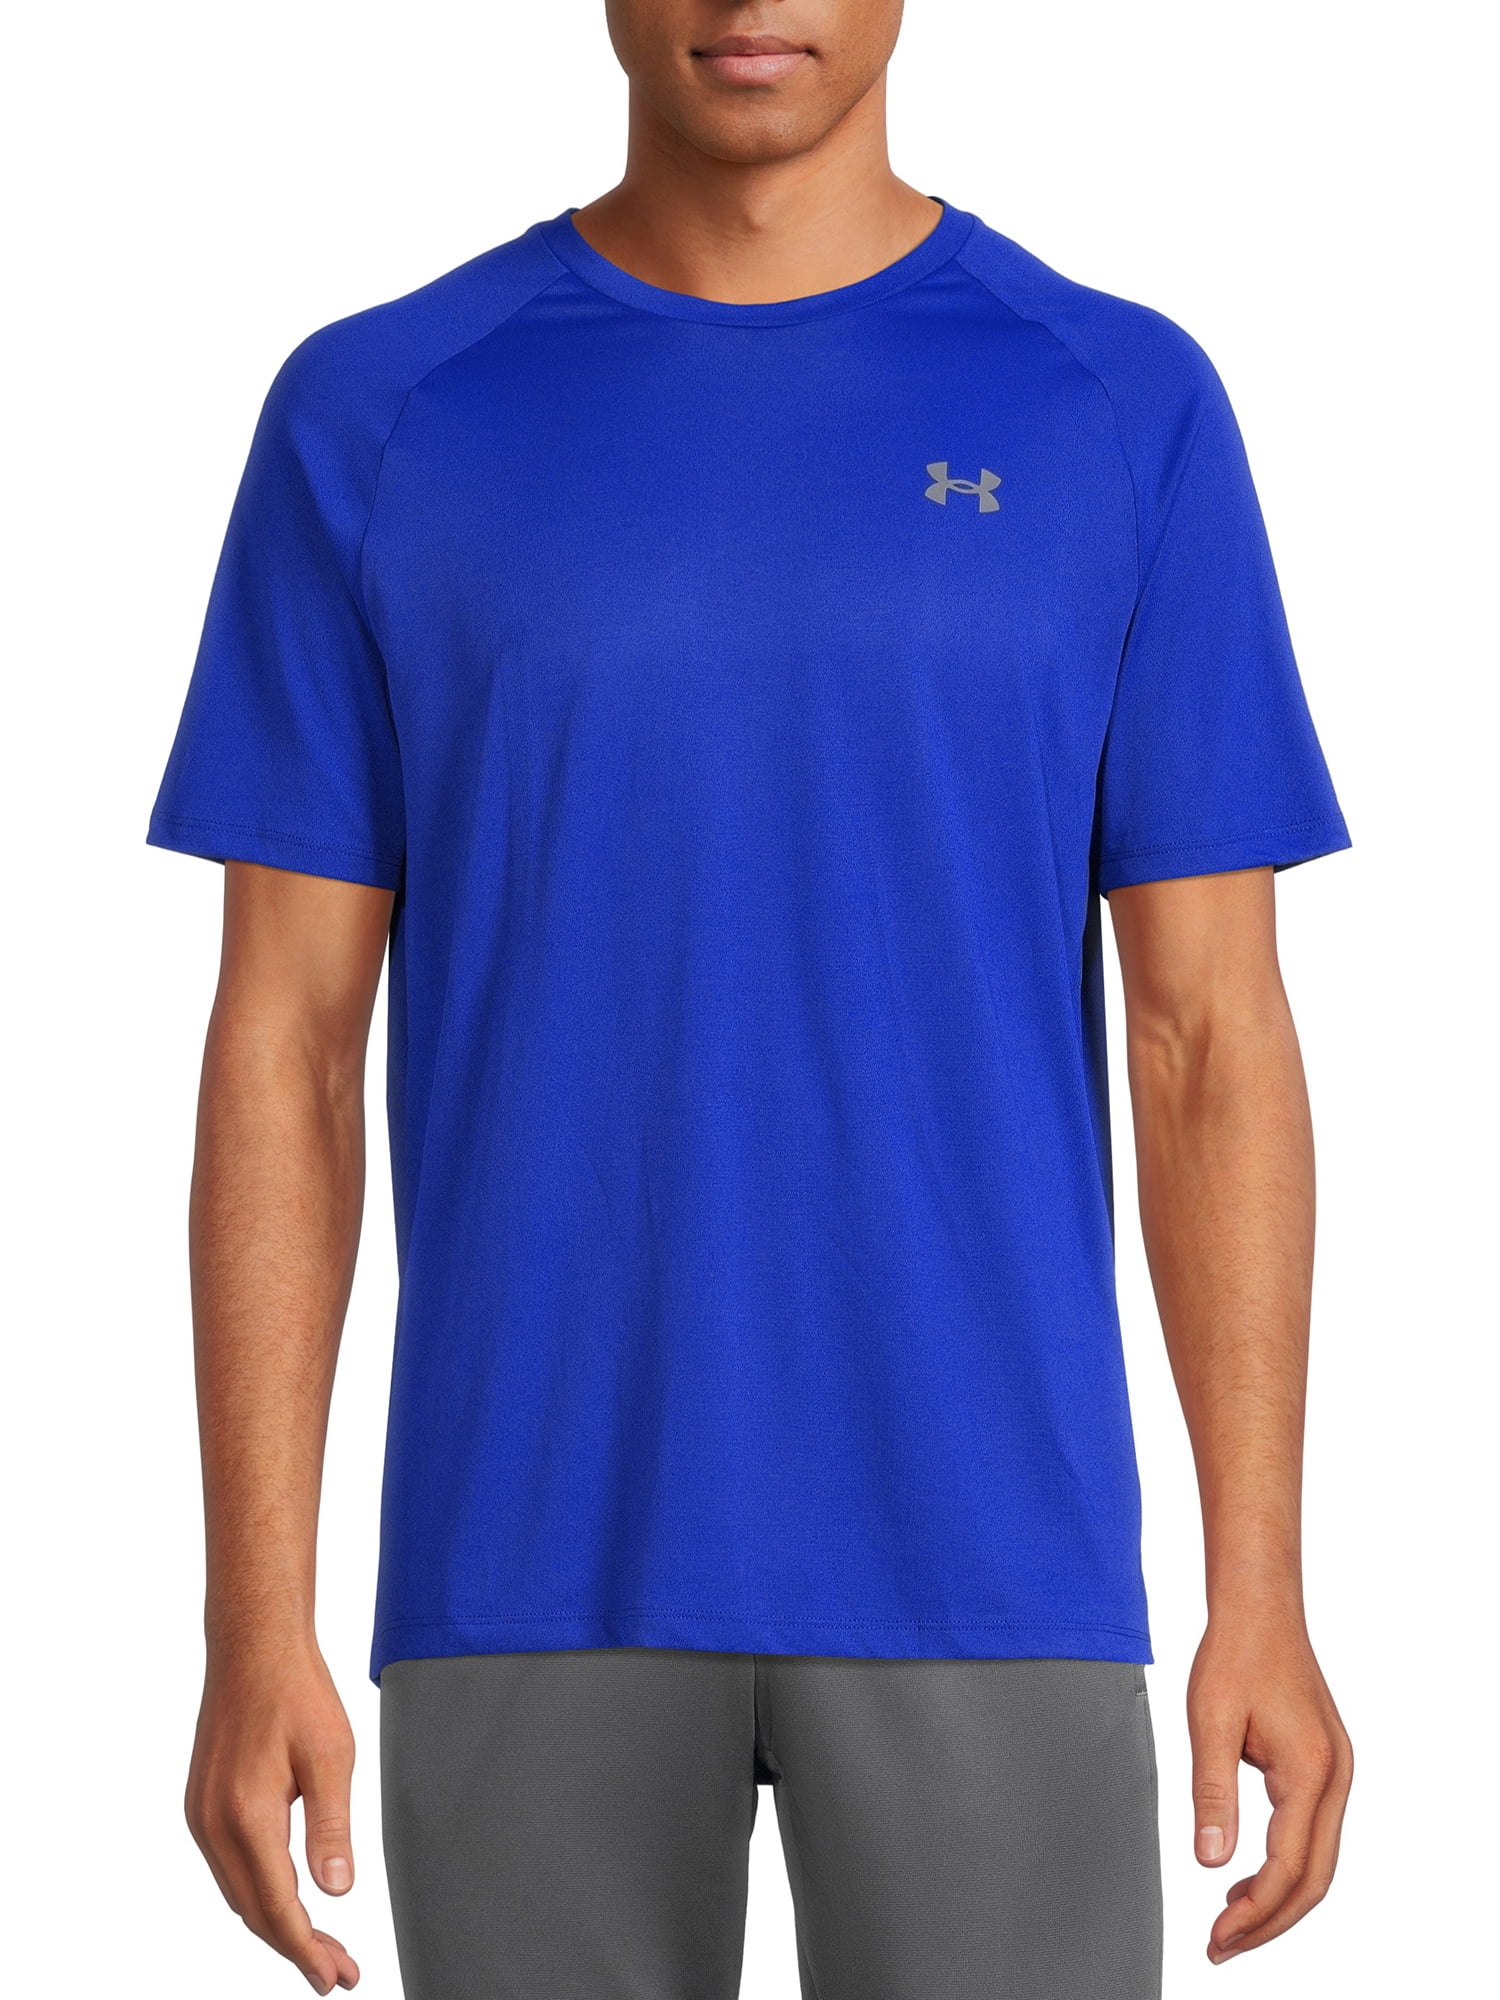 Under Armour Men's and Big Men's UA Tech 2.0 Short Sleeve T-Shirt, Sizes  S-2XL